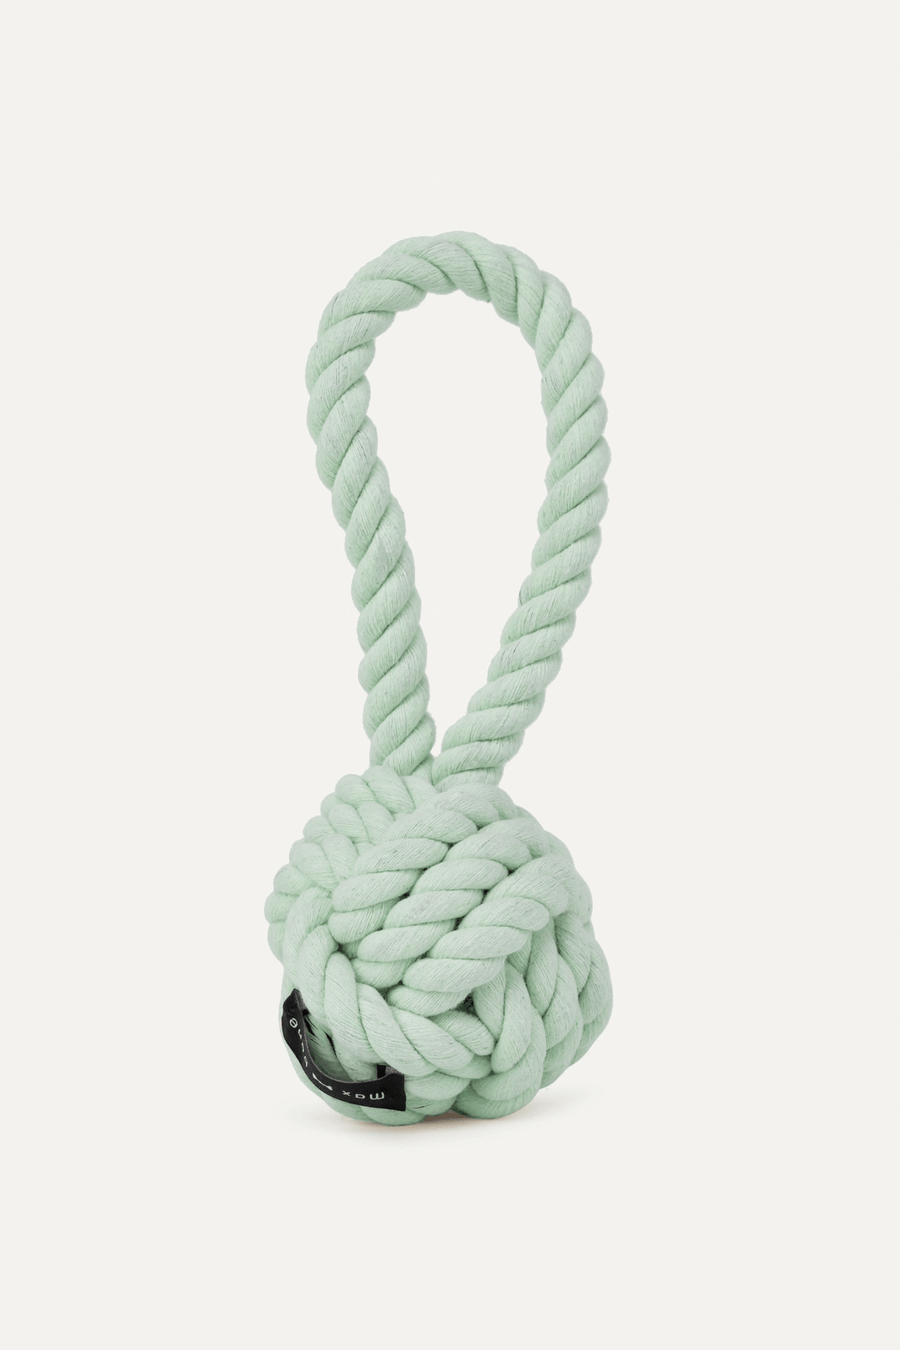 Maxbone Mint Large Twisted Rope Toy